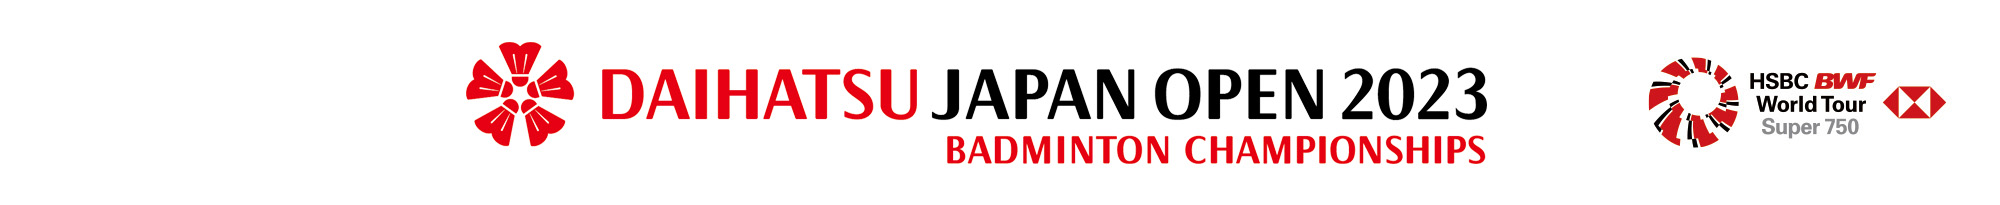 DAIHATSU JAPAN OPEN 2023 BADMINTON CHAMPIONSHIPS PART OF THE HSBC BWF World Tour Super 750